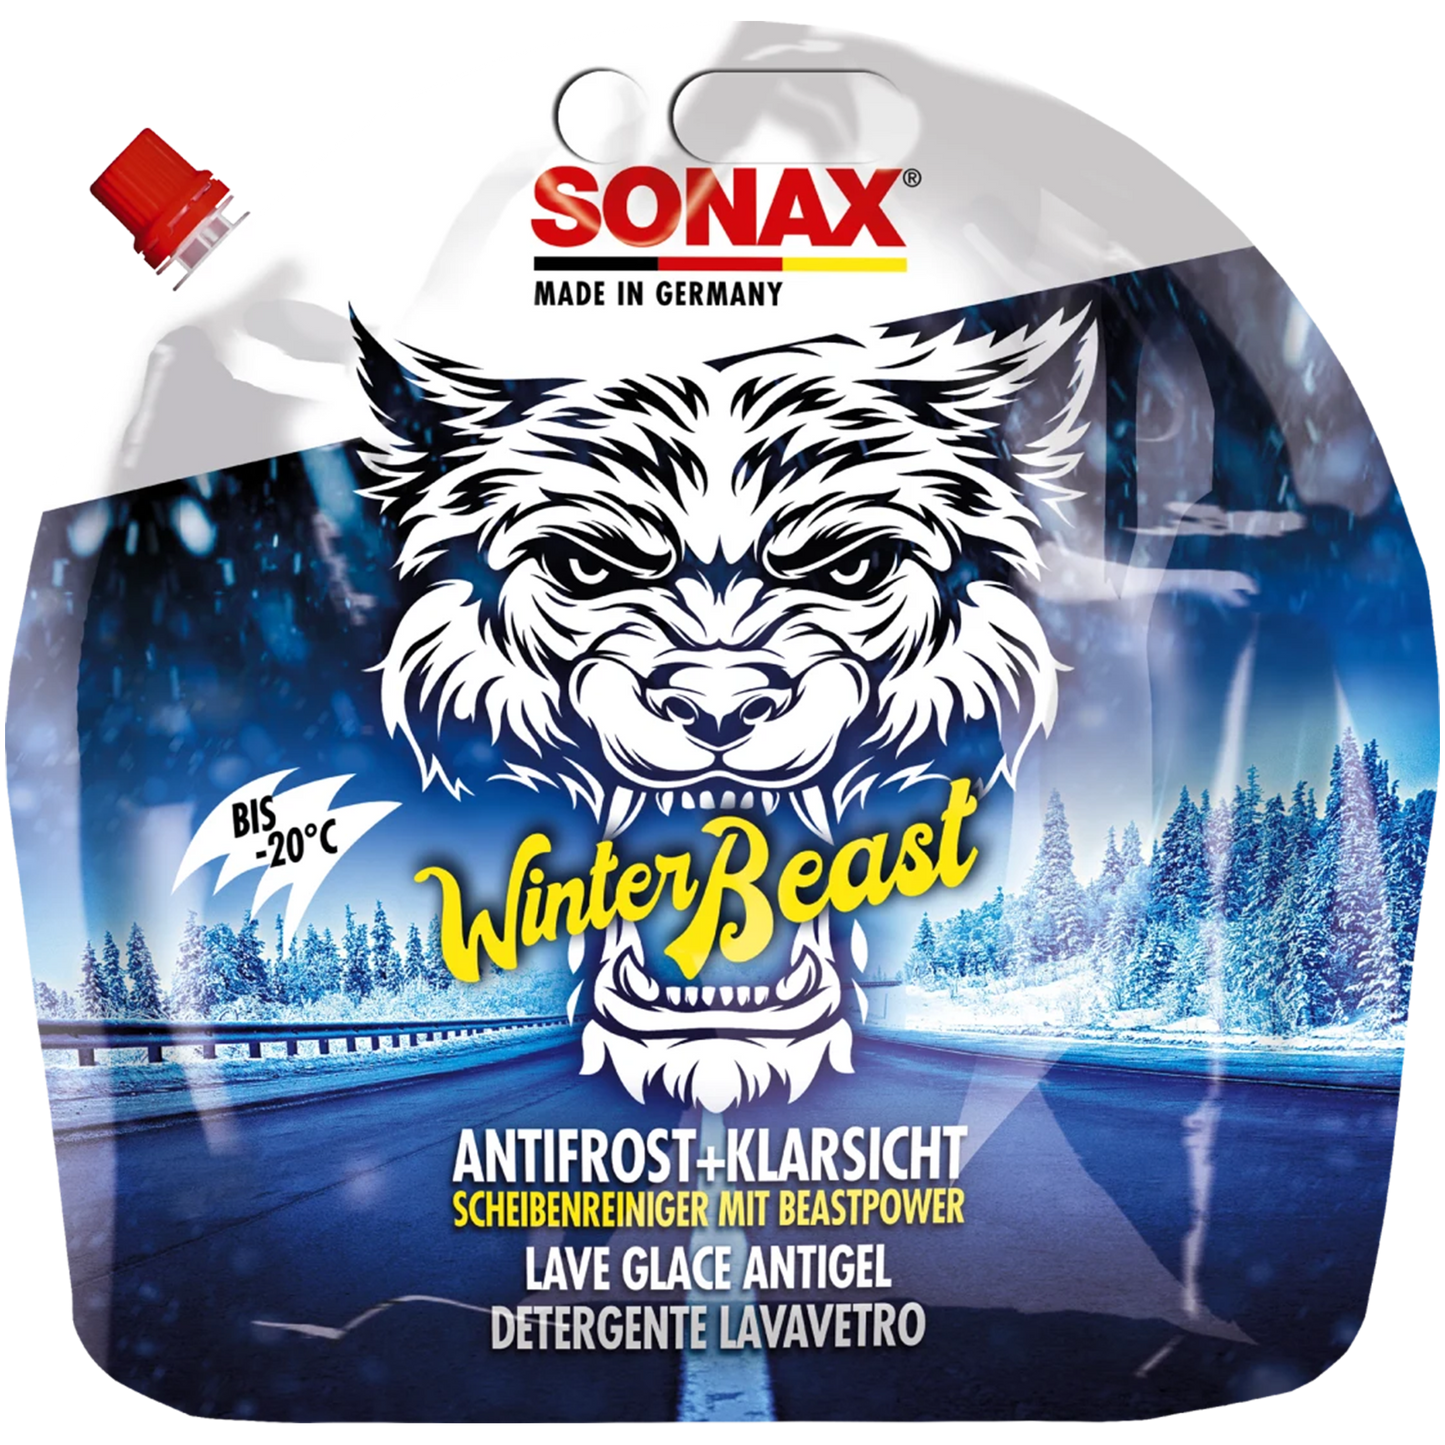 SONAX "Winterbeast" Antifrost & Klarsicht bis -20°C